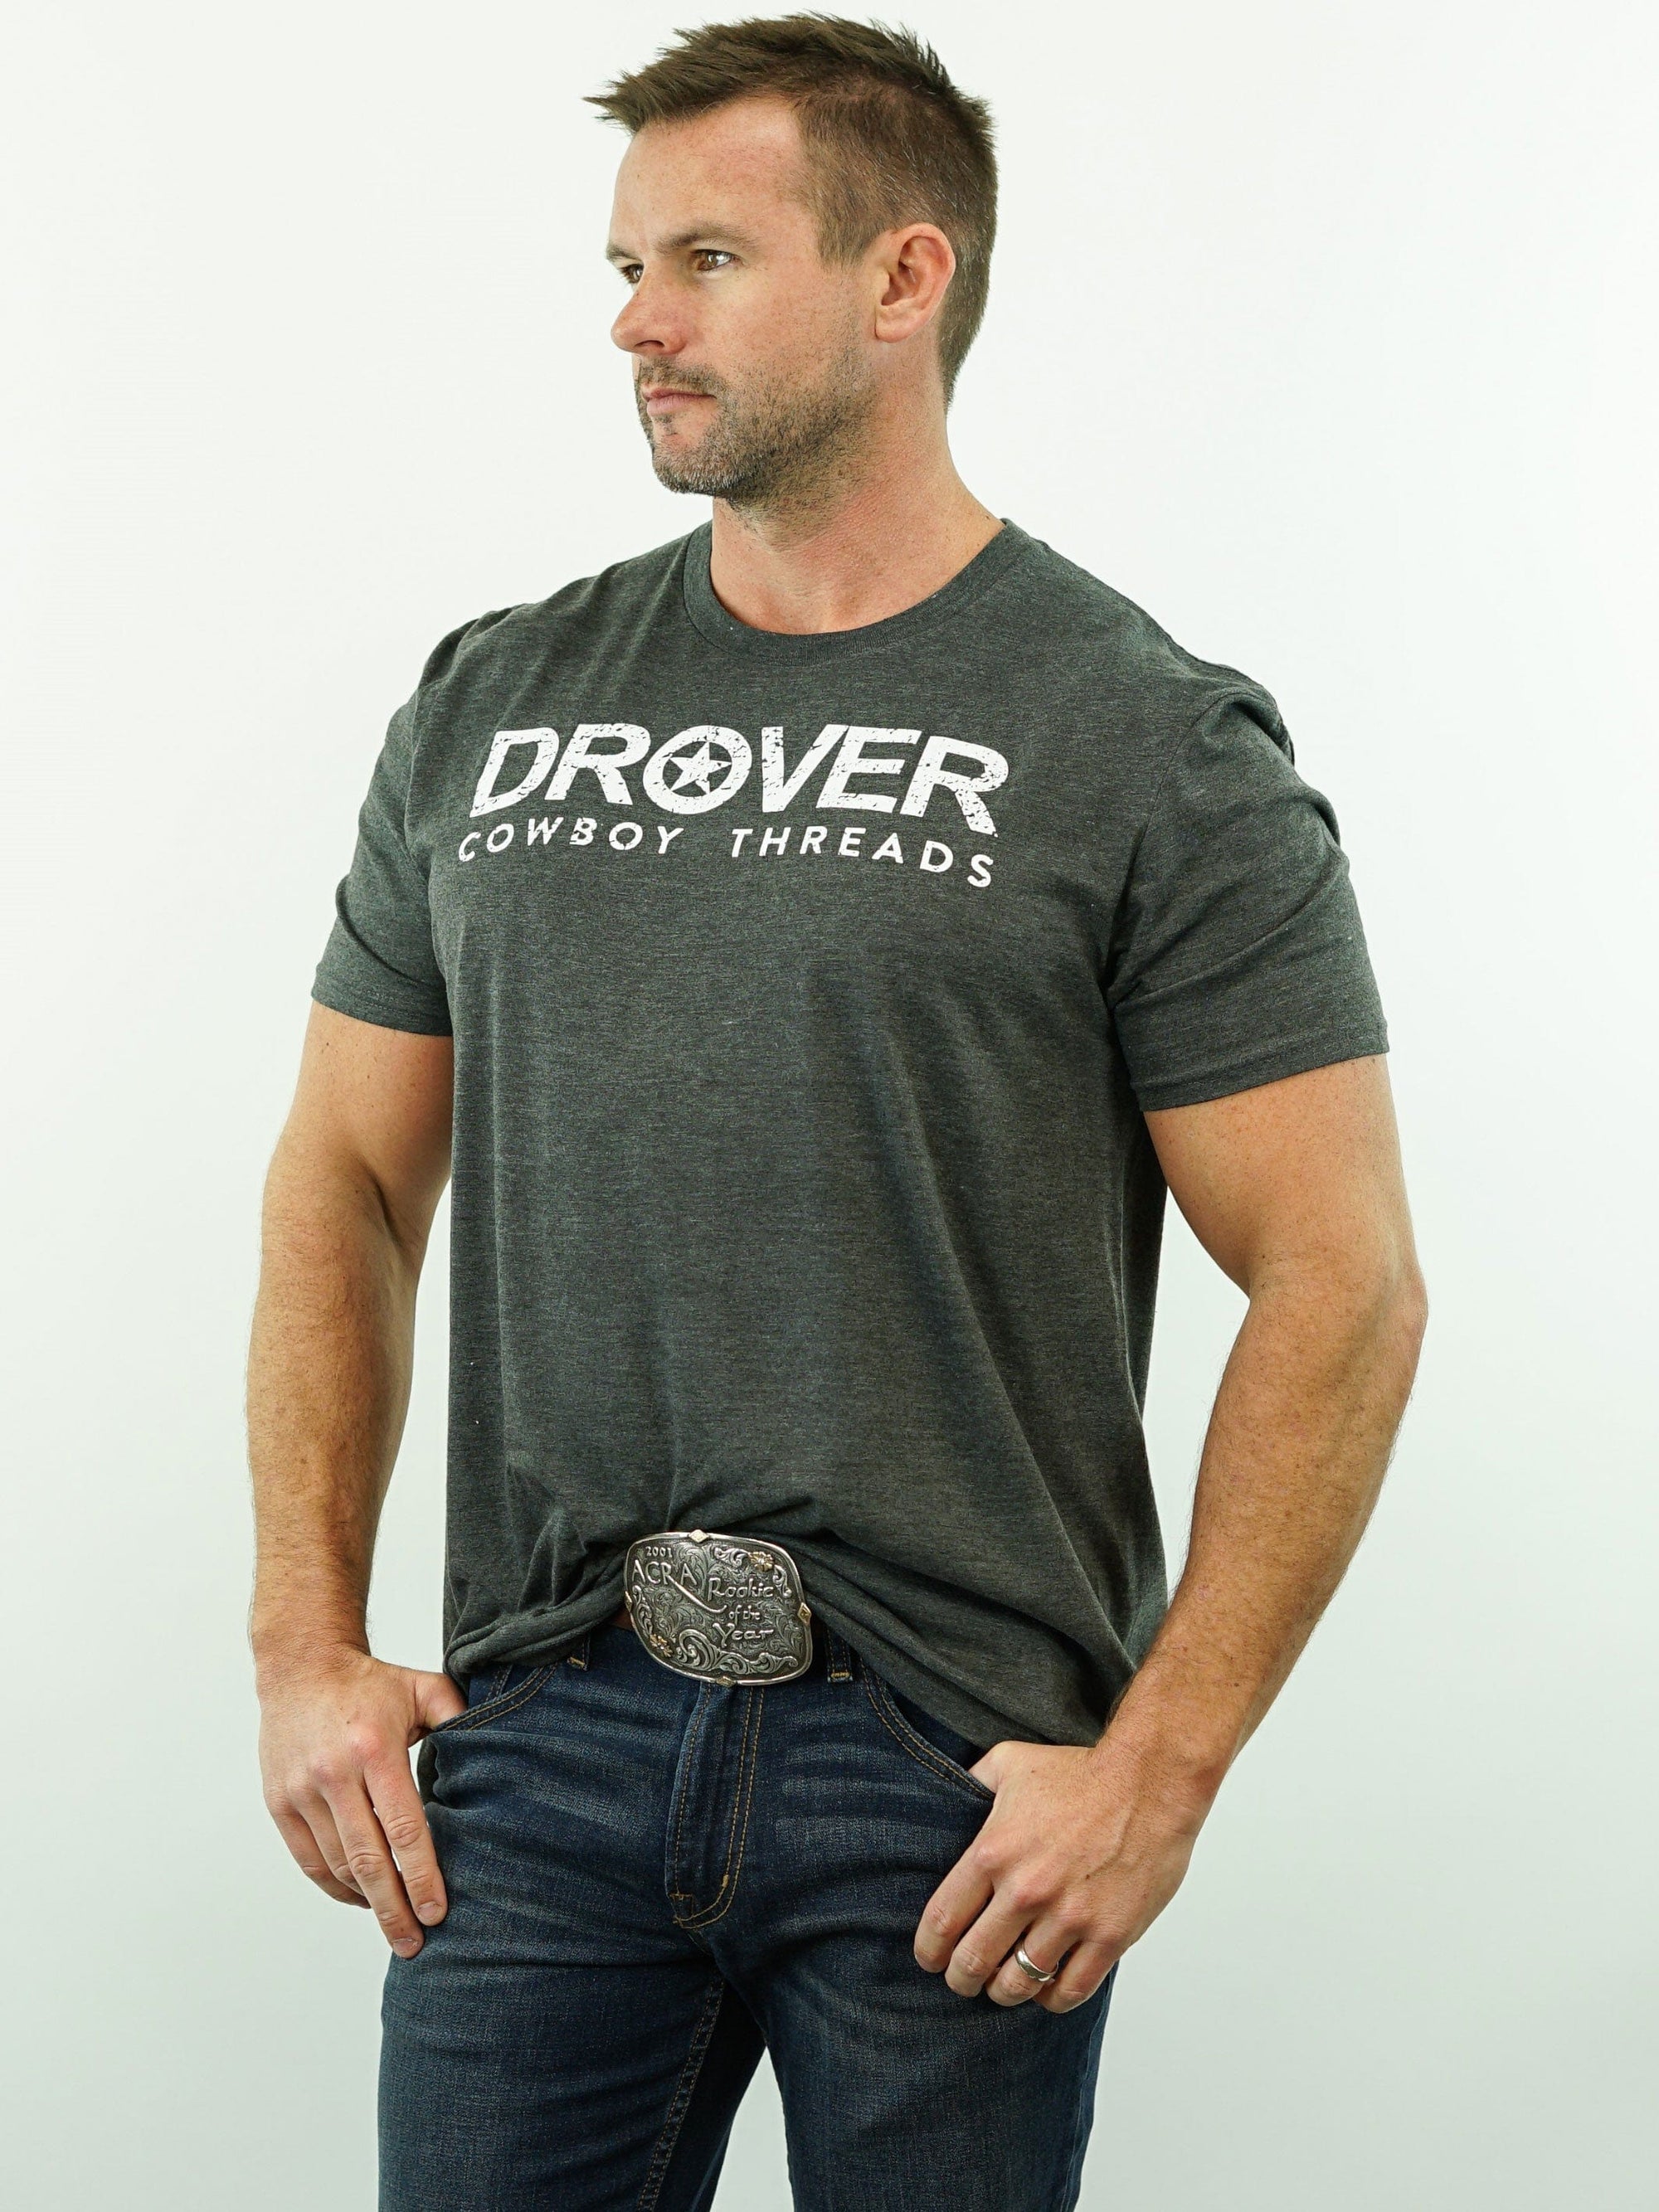 Drover Cowboy Threads Shirts T-Shirt - Drover Cowboy Threads - Graphite Heather